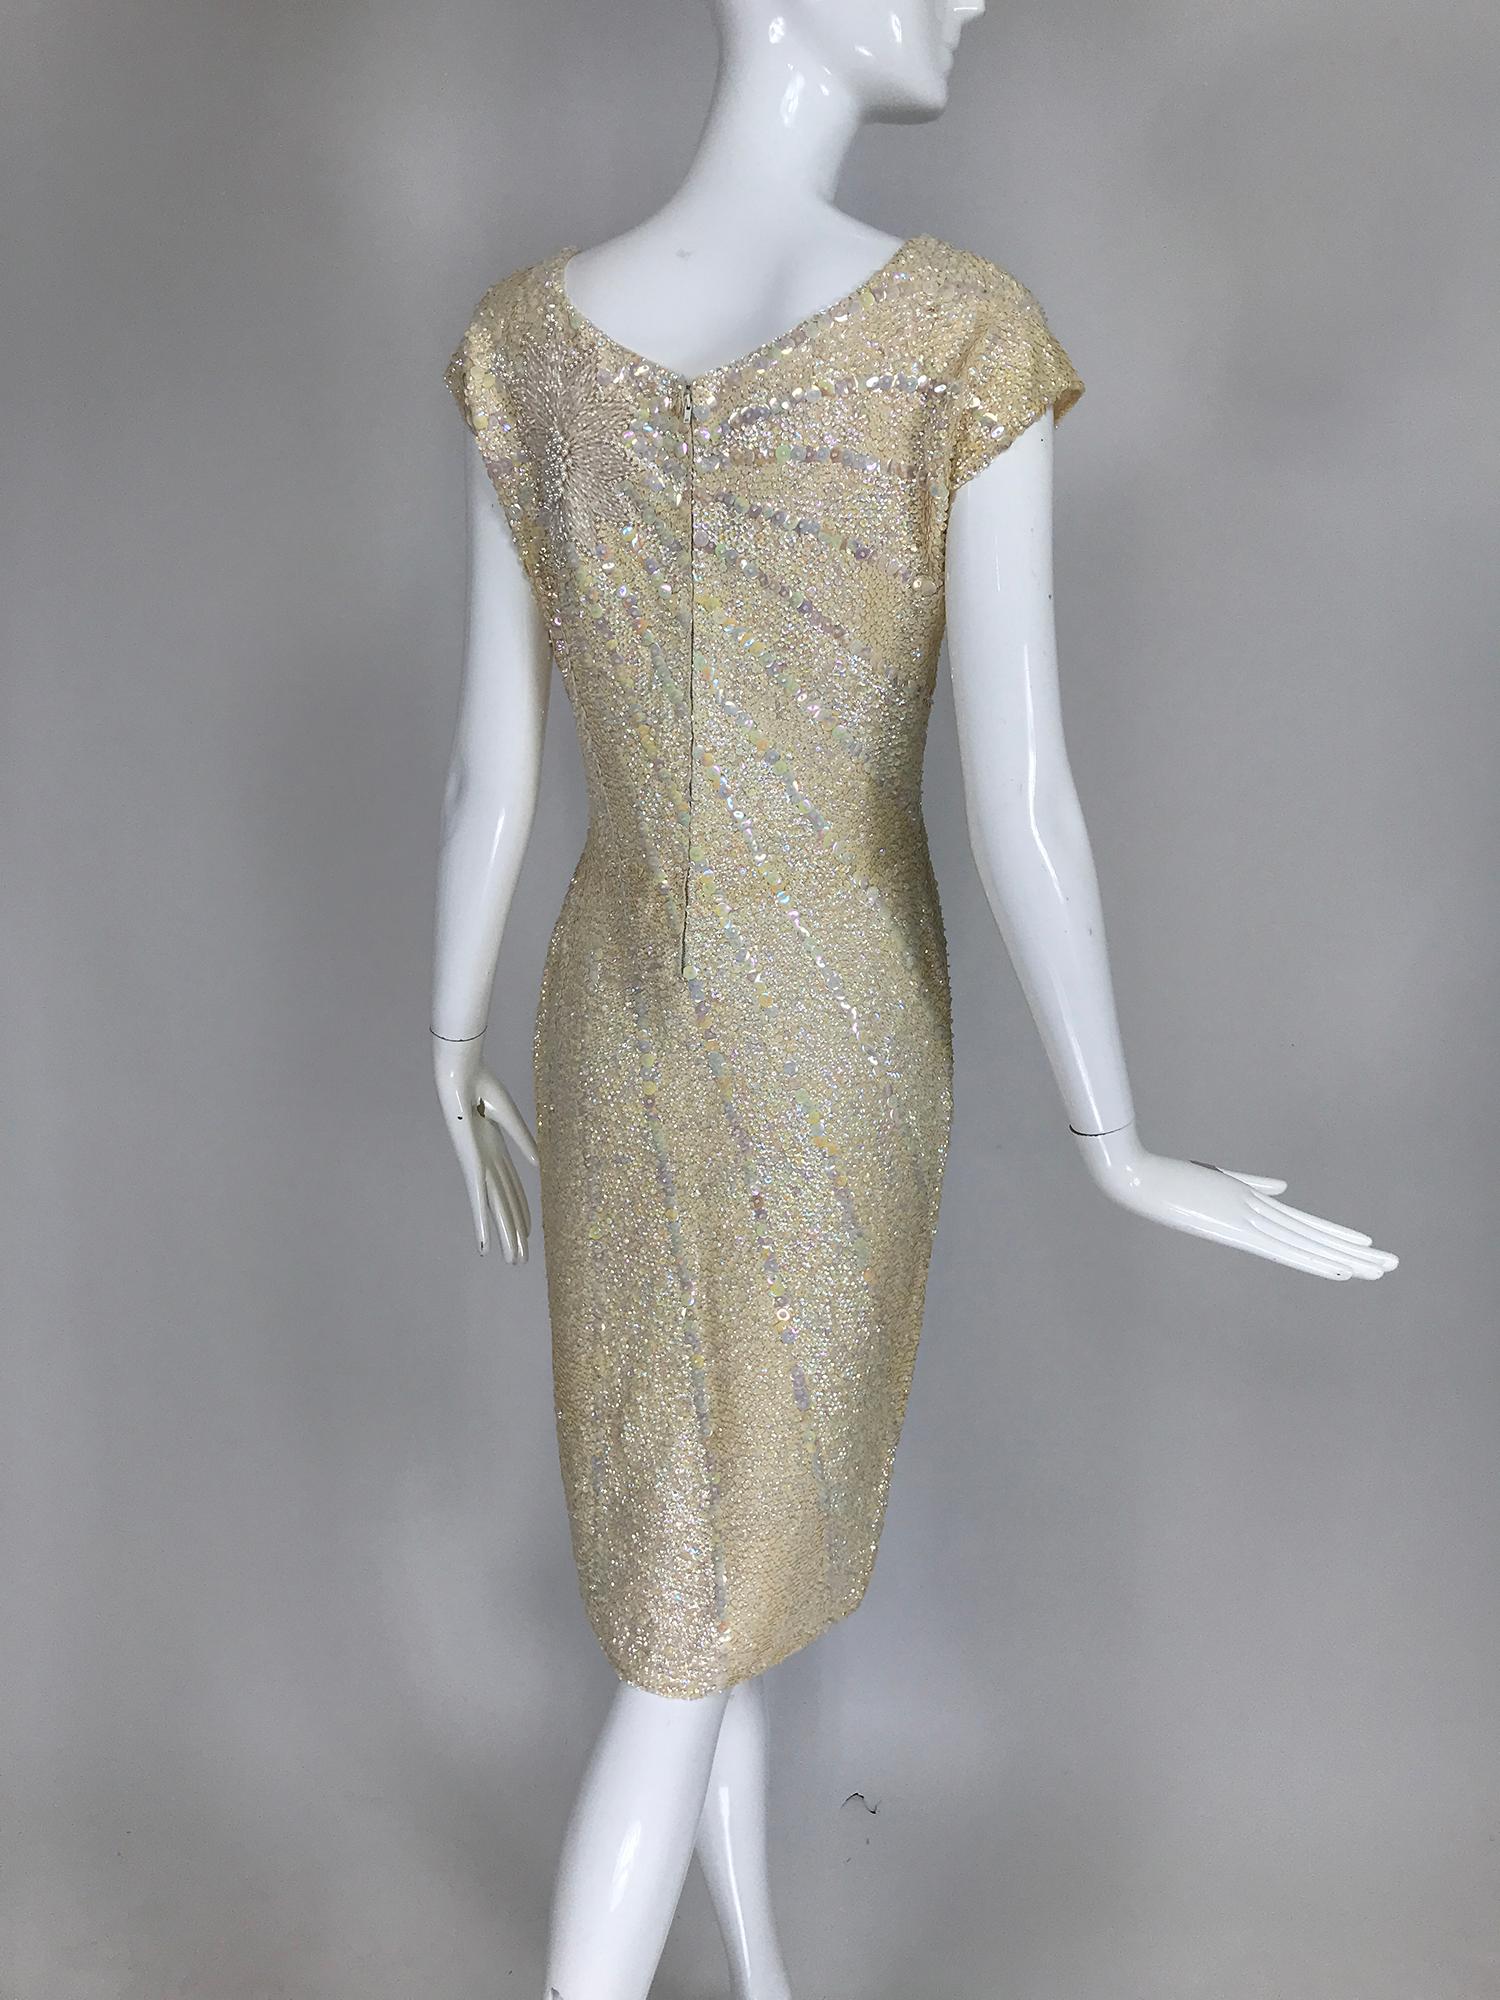 Women's Gene Shelly's Boutique Internationale Cream Sequin Sheath Dress 1960s